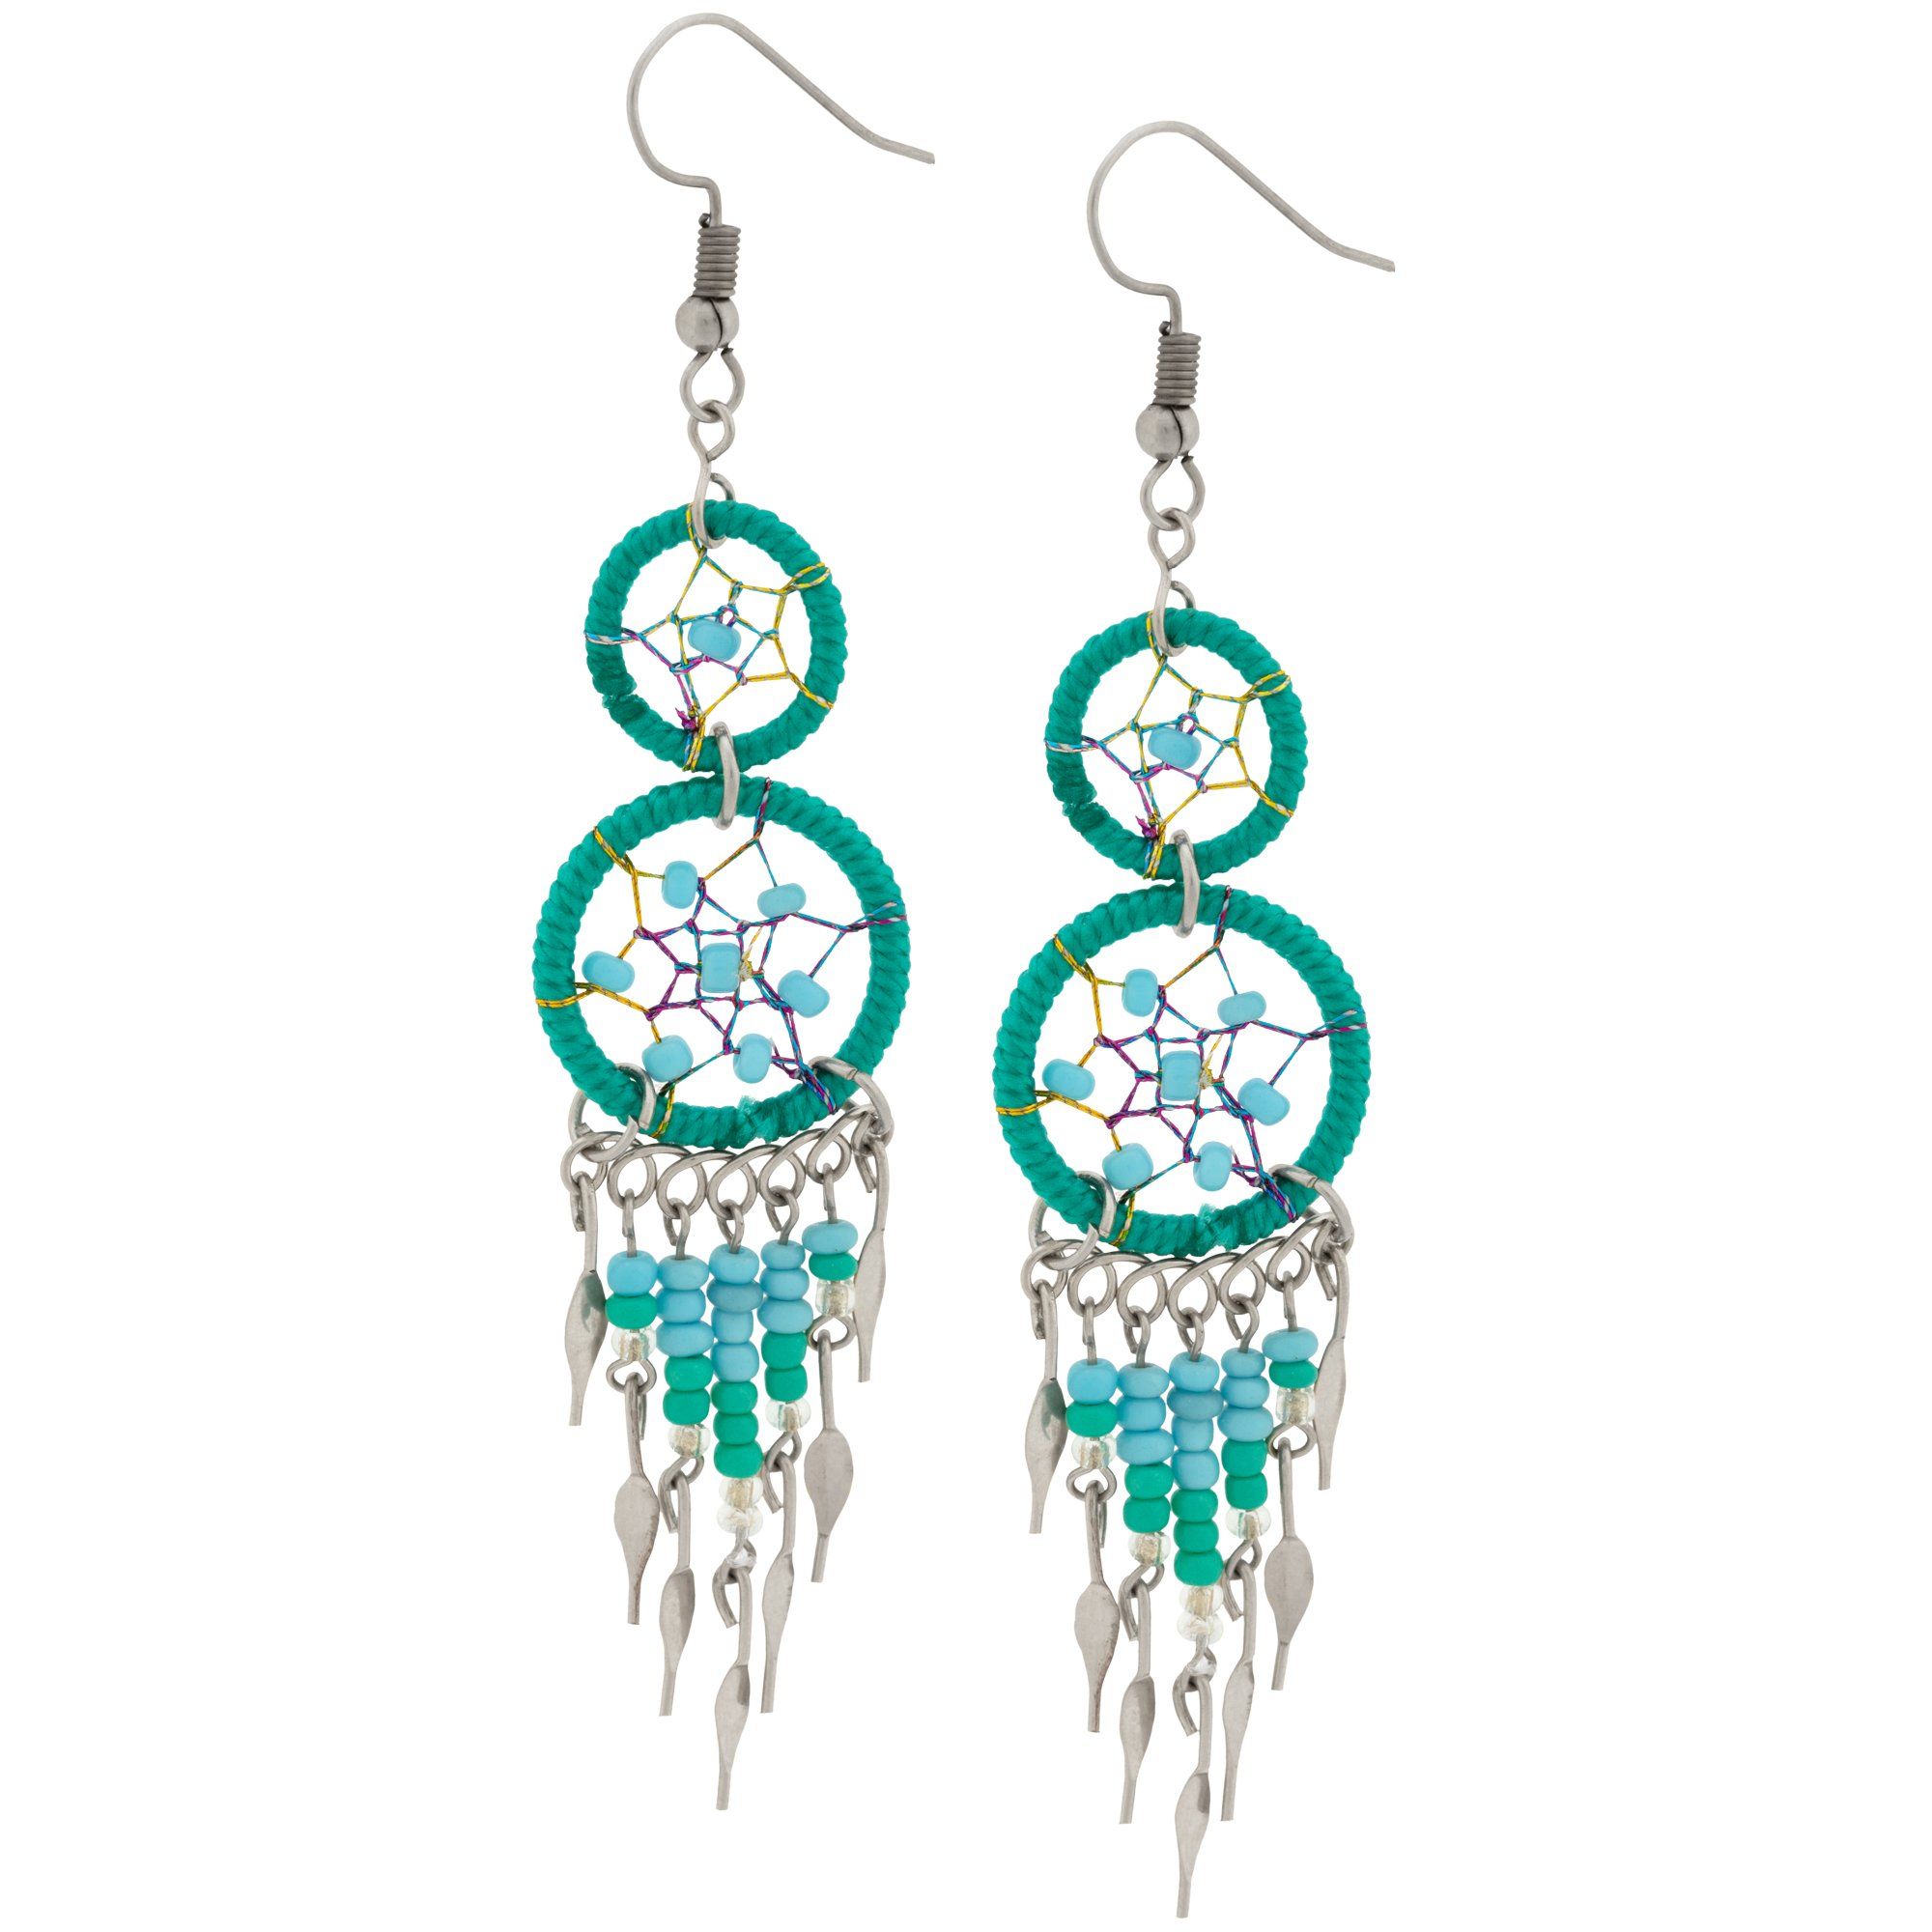 Double Dreamcatcher Dazzling Earrings - Turquoise